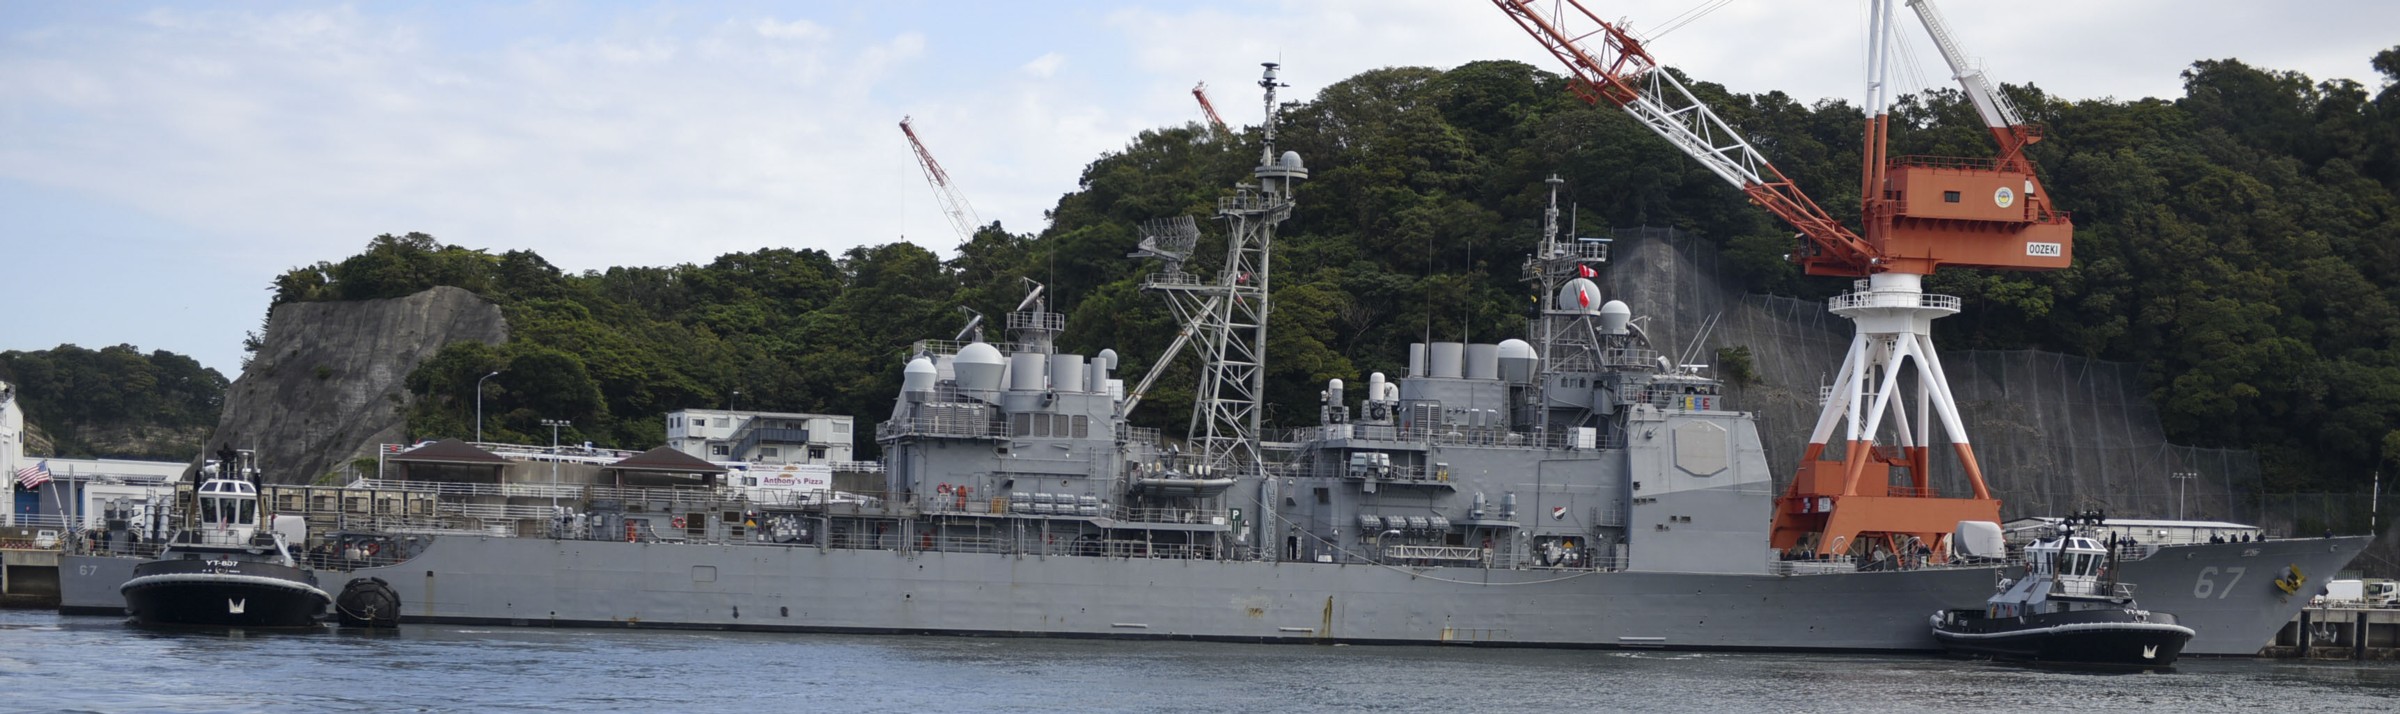 cg-67 uss shiloh ticonderoga class guided missile cruiser aegis us navy fleact yokosuka japan 61